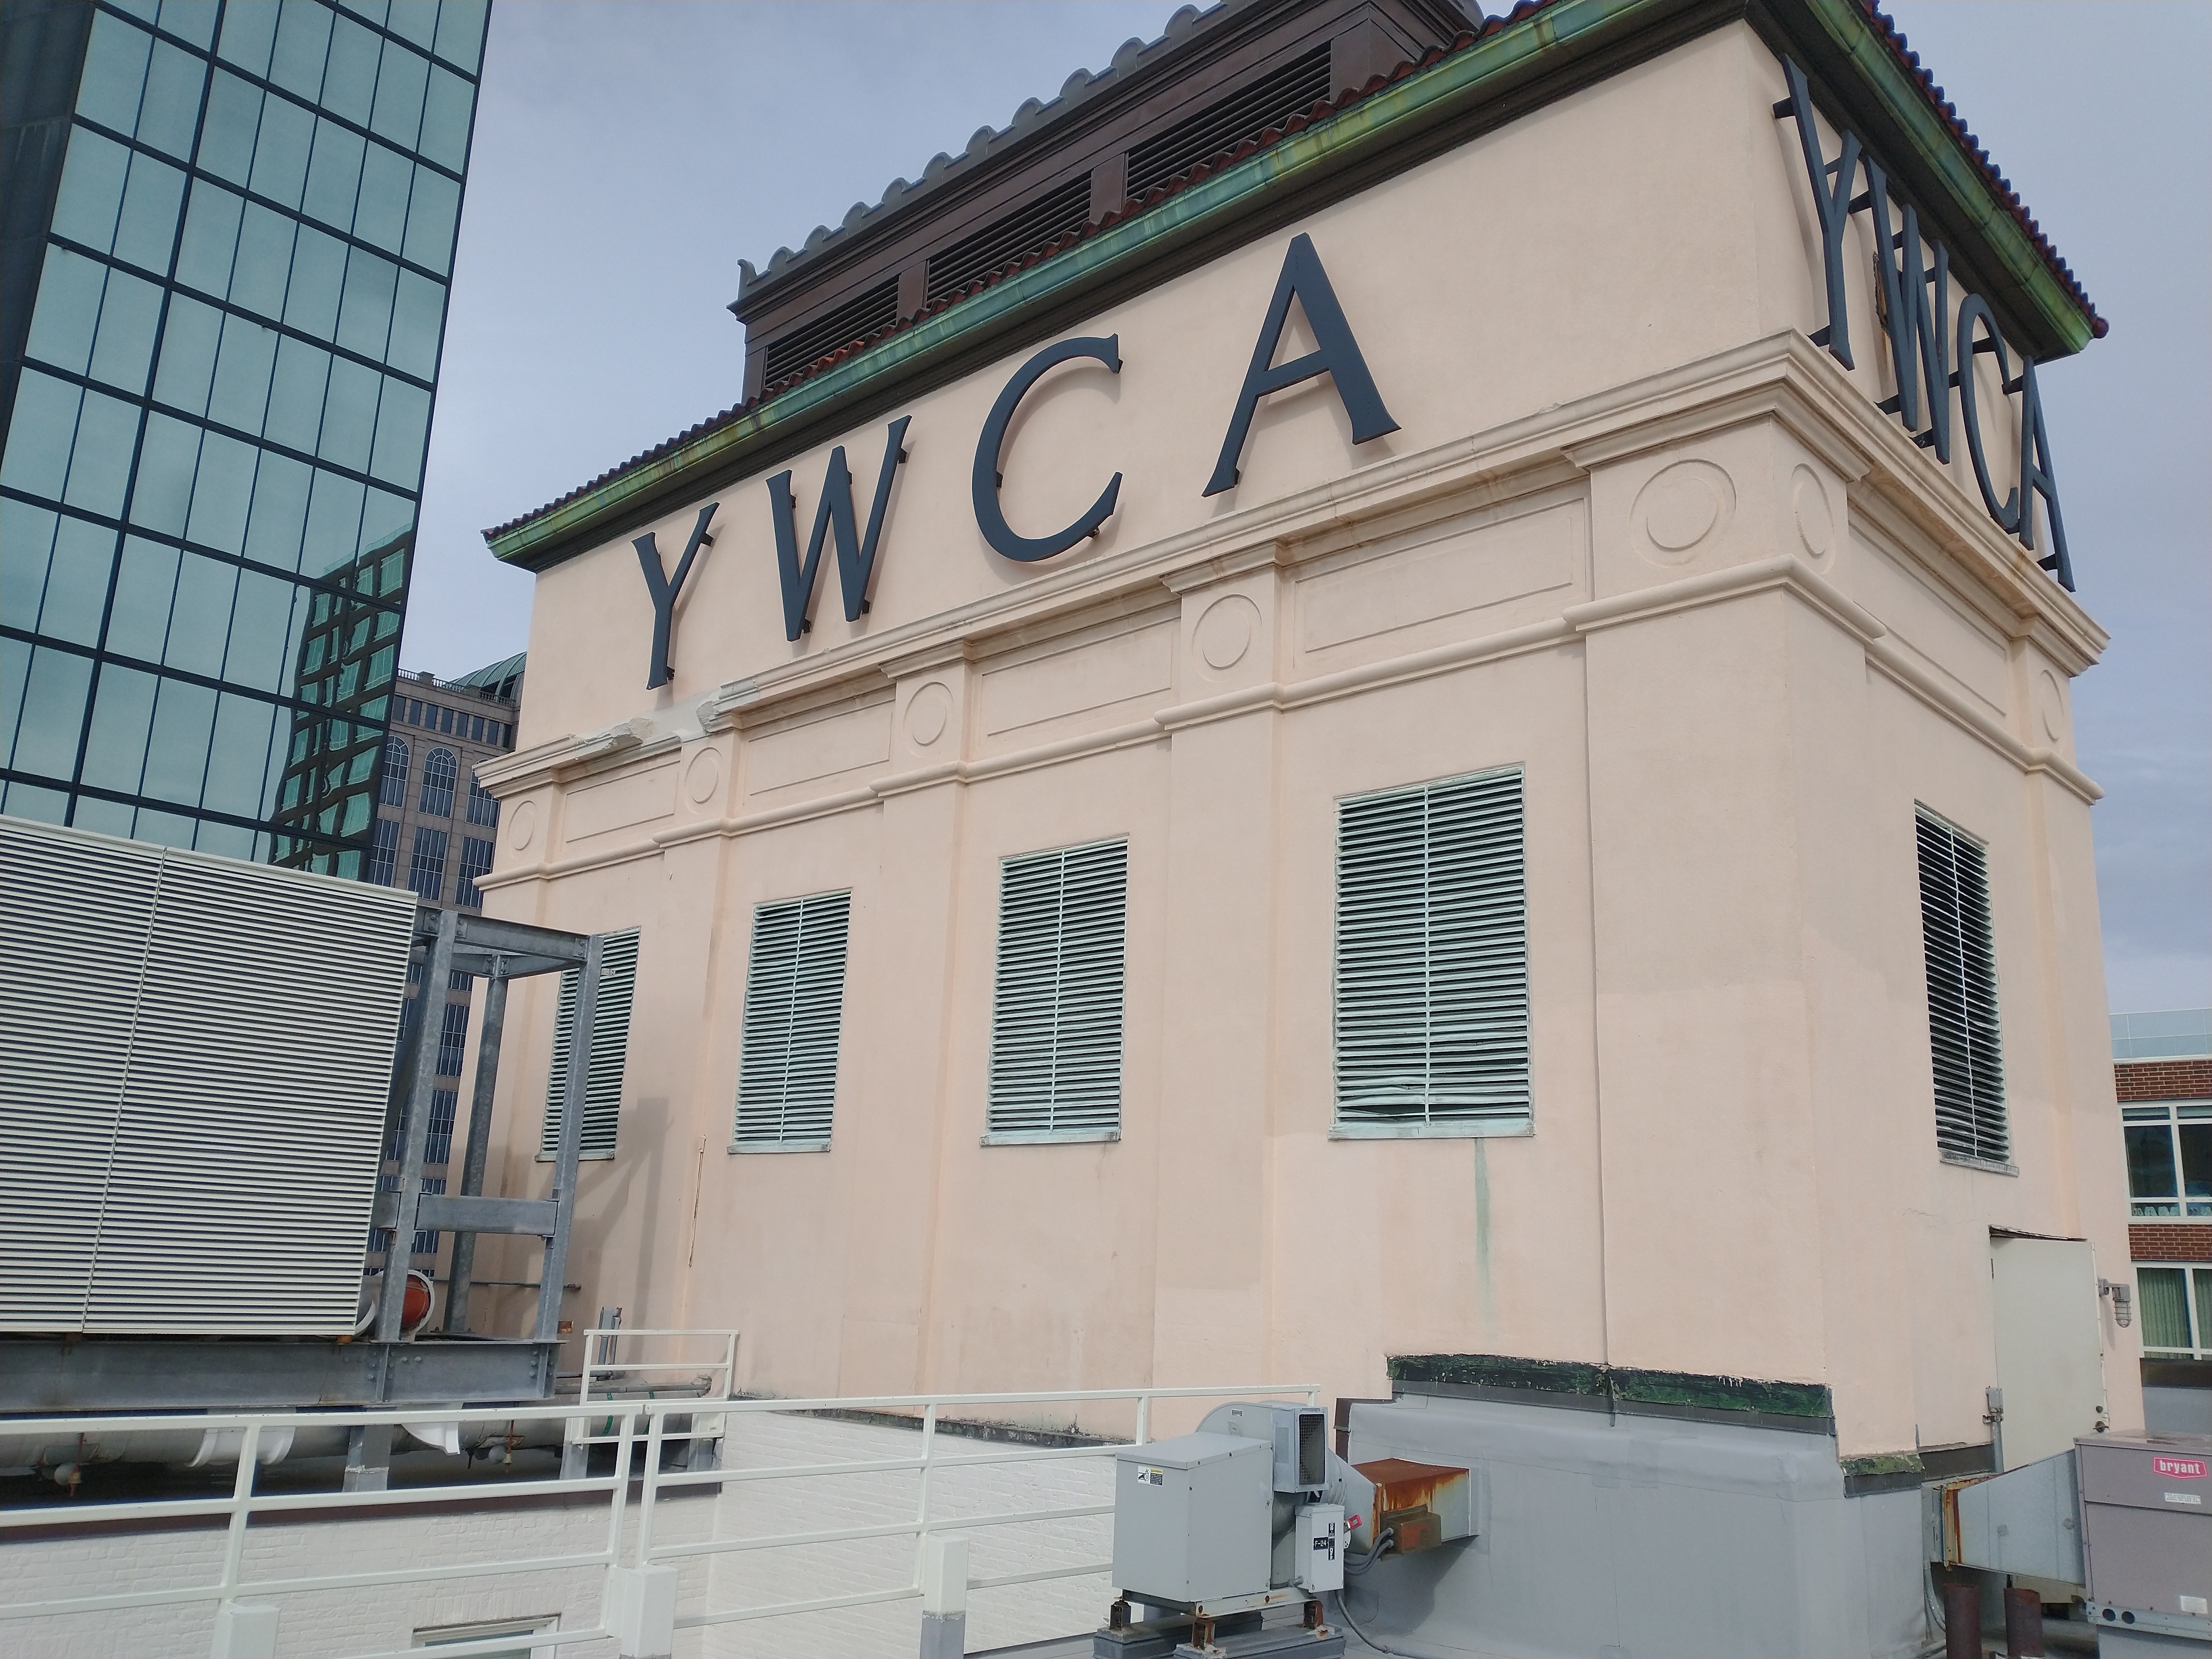 Historic 1929 YWCA sign